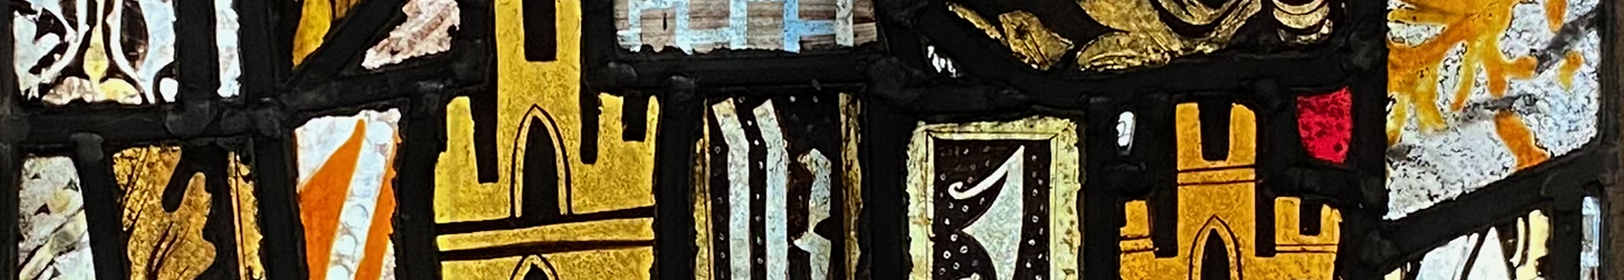 Abstract batak banner of churches